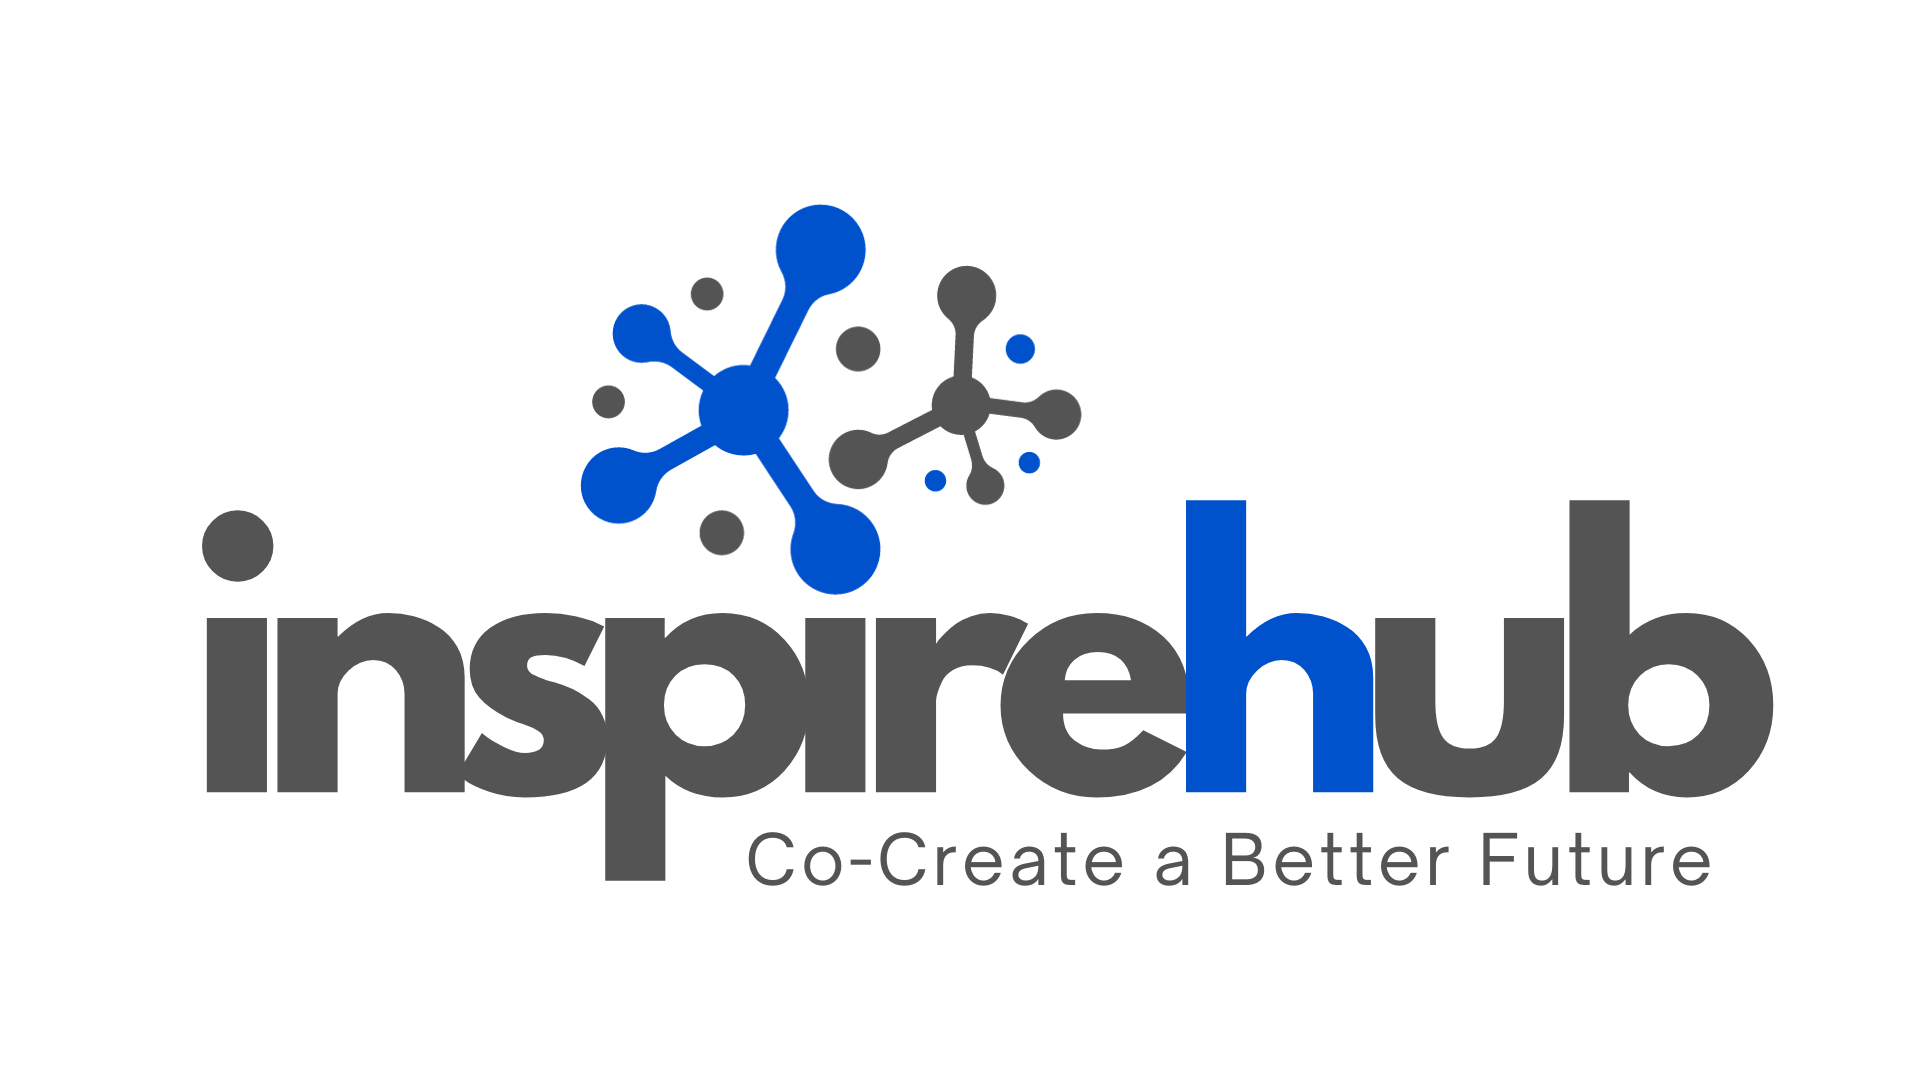 Inspire_hub_logo_500x500